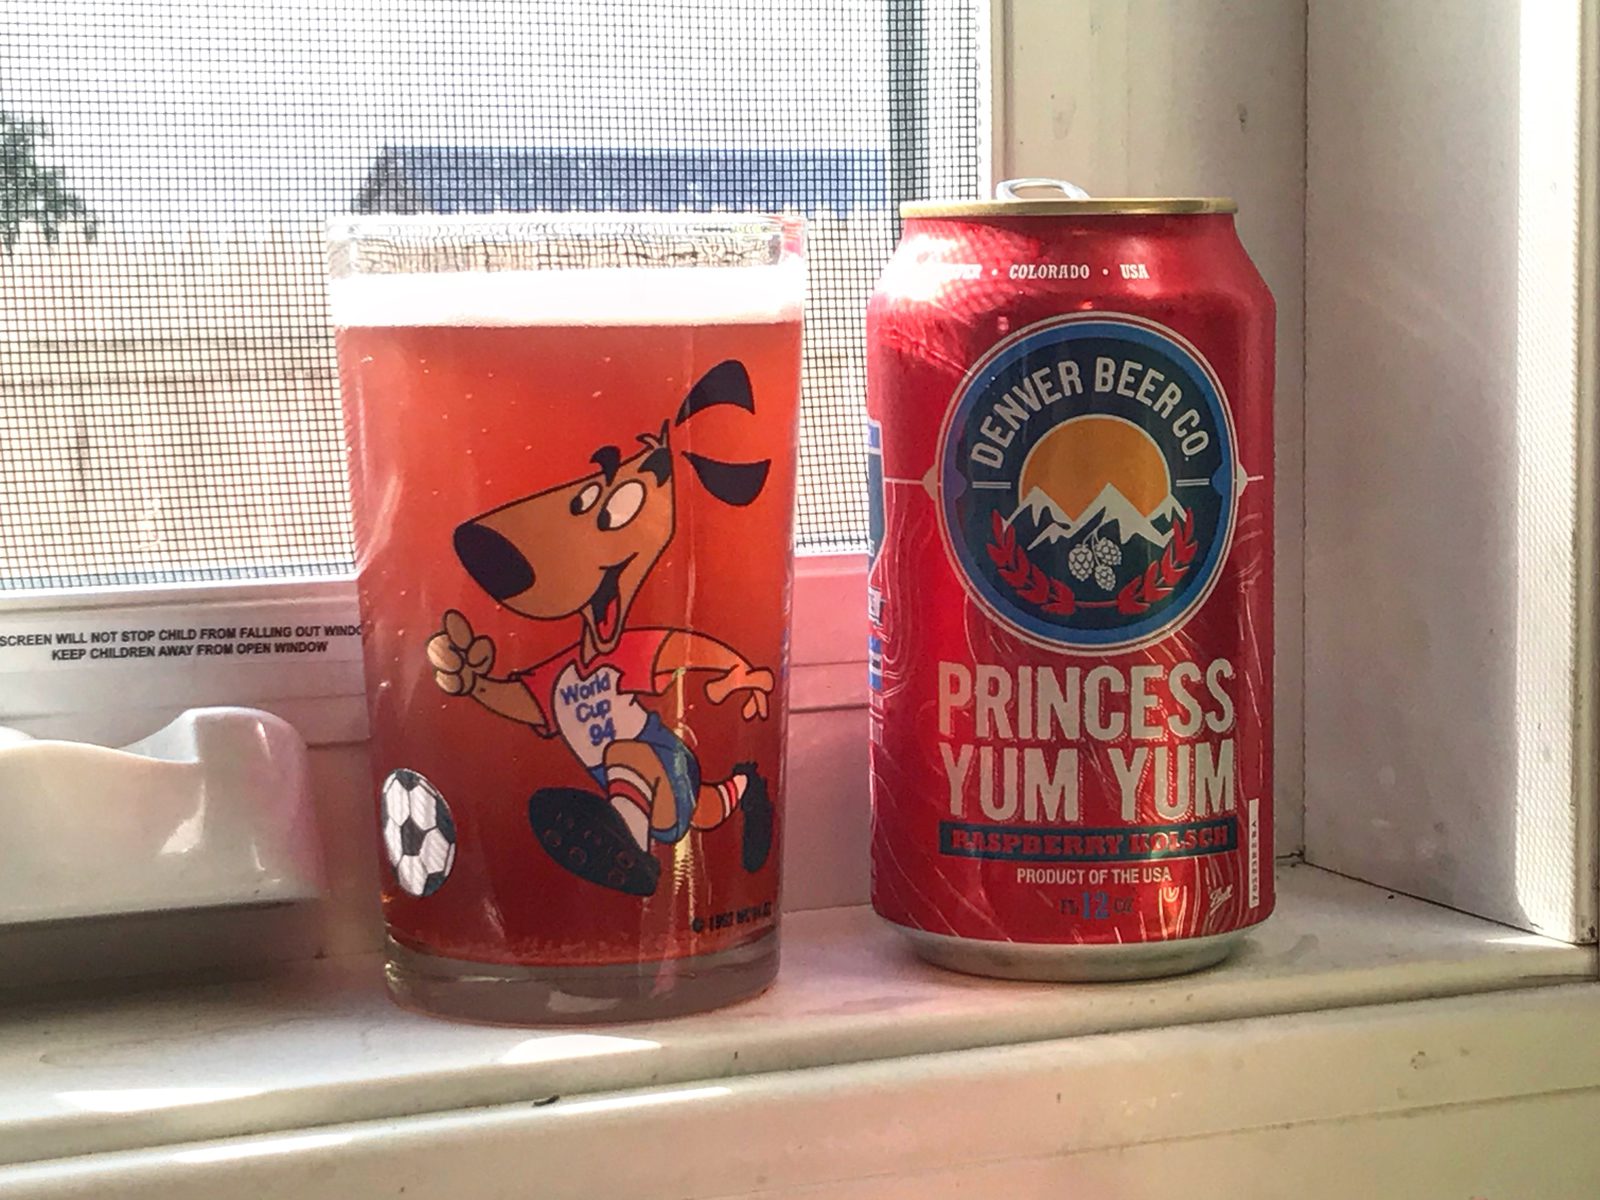 Denver Beer Co.: Princess Yum Yum